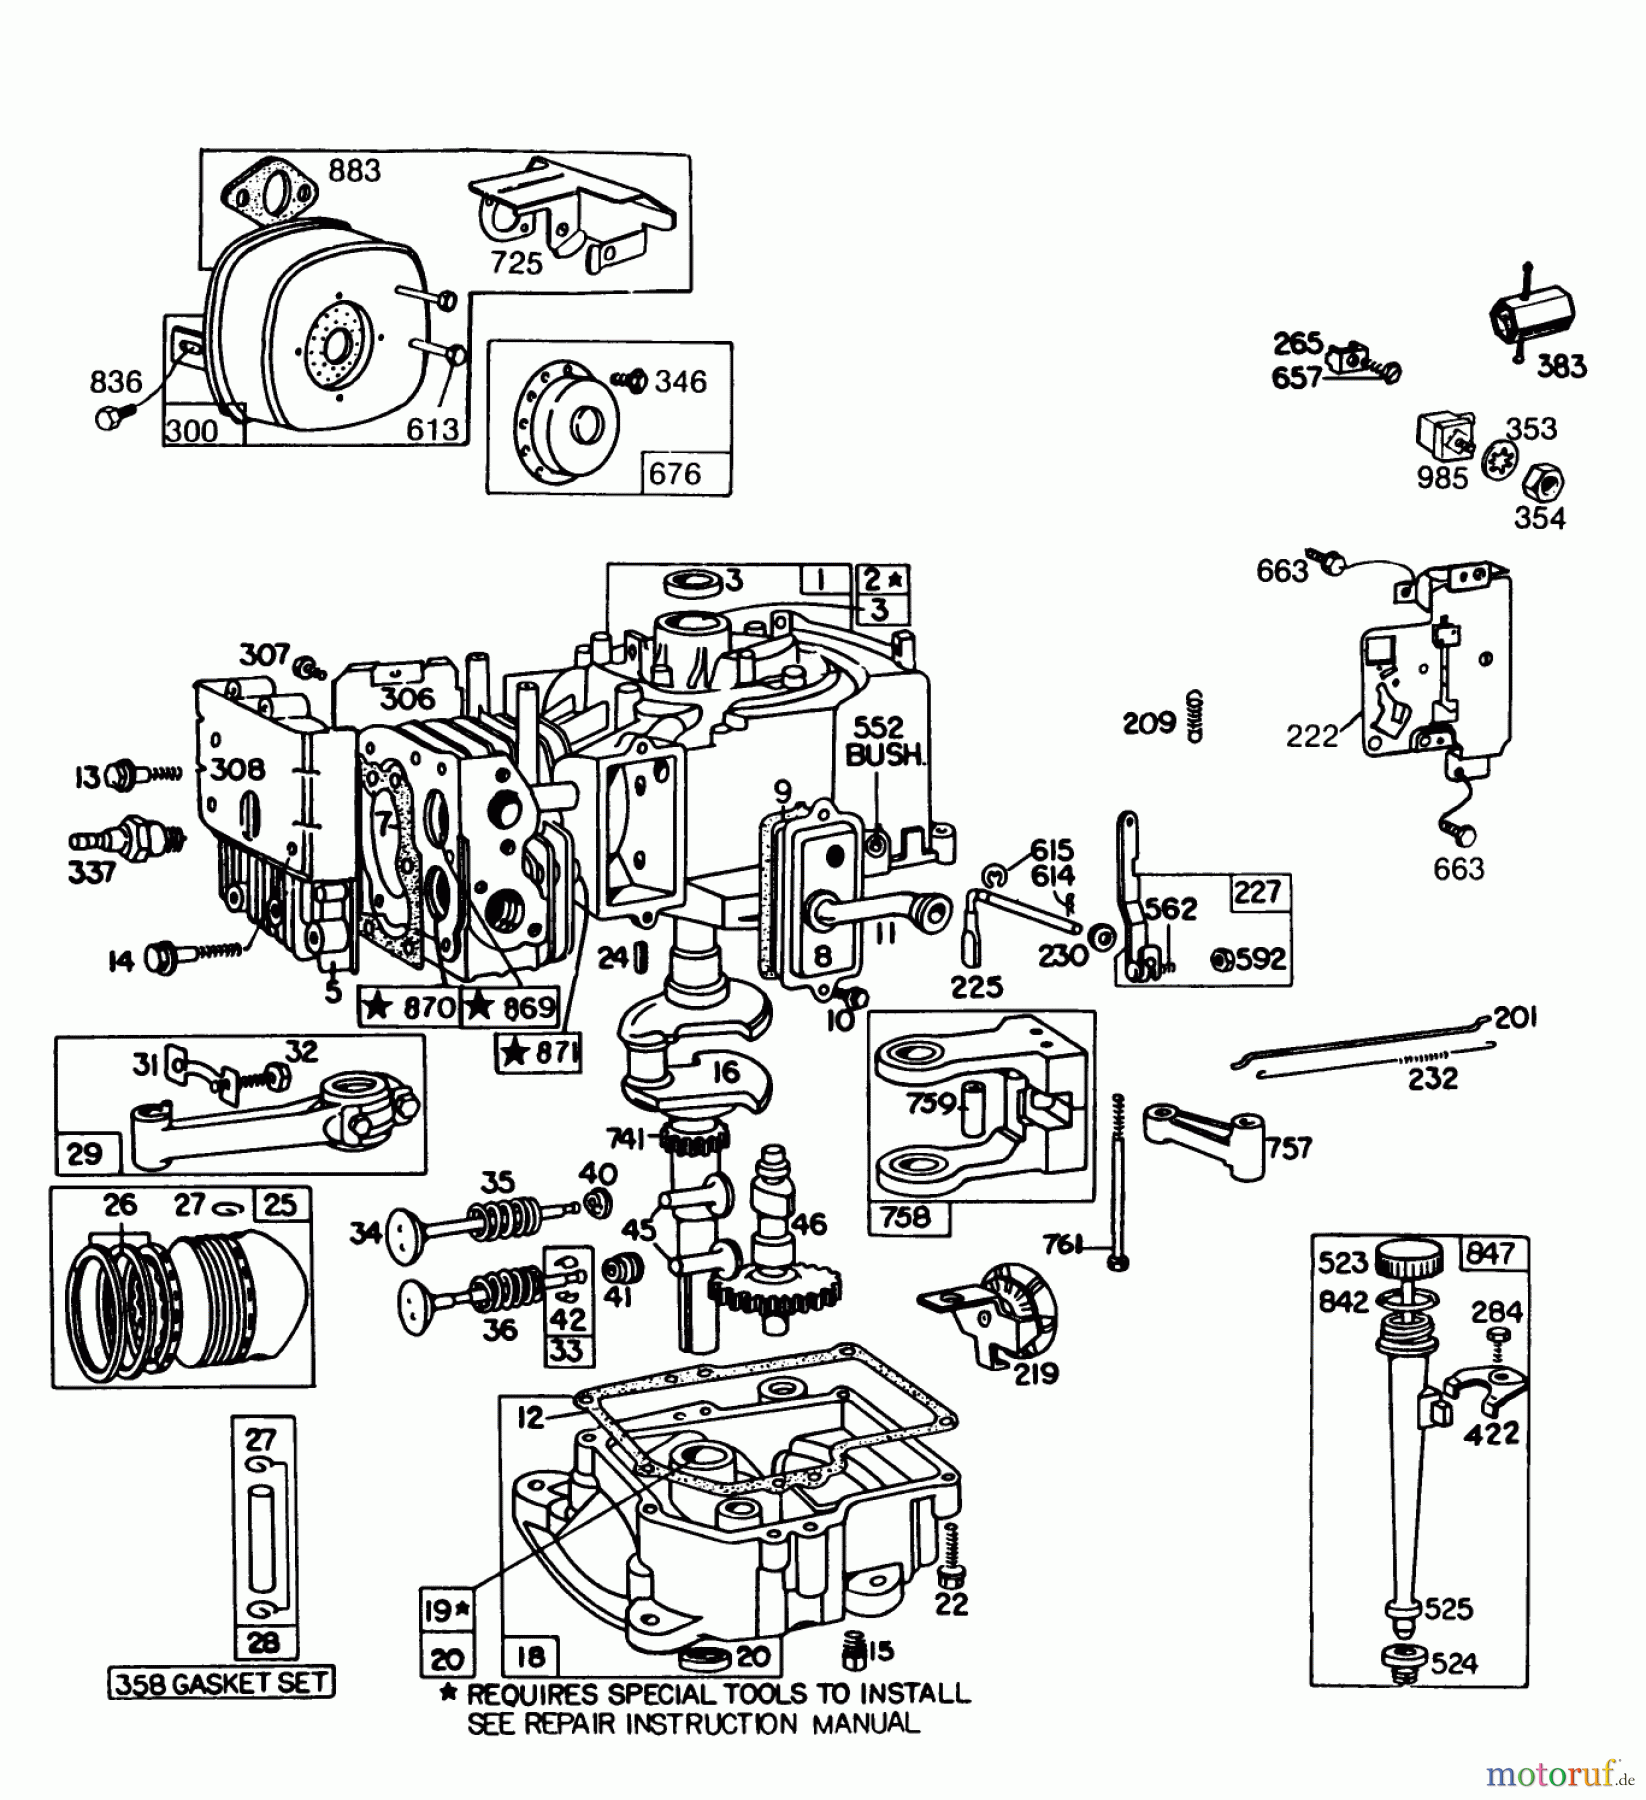  Toro Neu Mowers, Rear-Engine Rider 56145 (8-32) - Toro 8-32 Rear Engine Rider, 1986 (6000001-6999999) ENGINE BRIGGS & STRATTON MODEL NO. 191702-2160-01 8 H.P. REAR ENGINE RIDER RECOIL MODEL 56138 #2